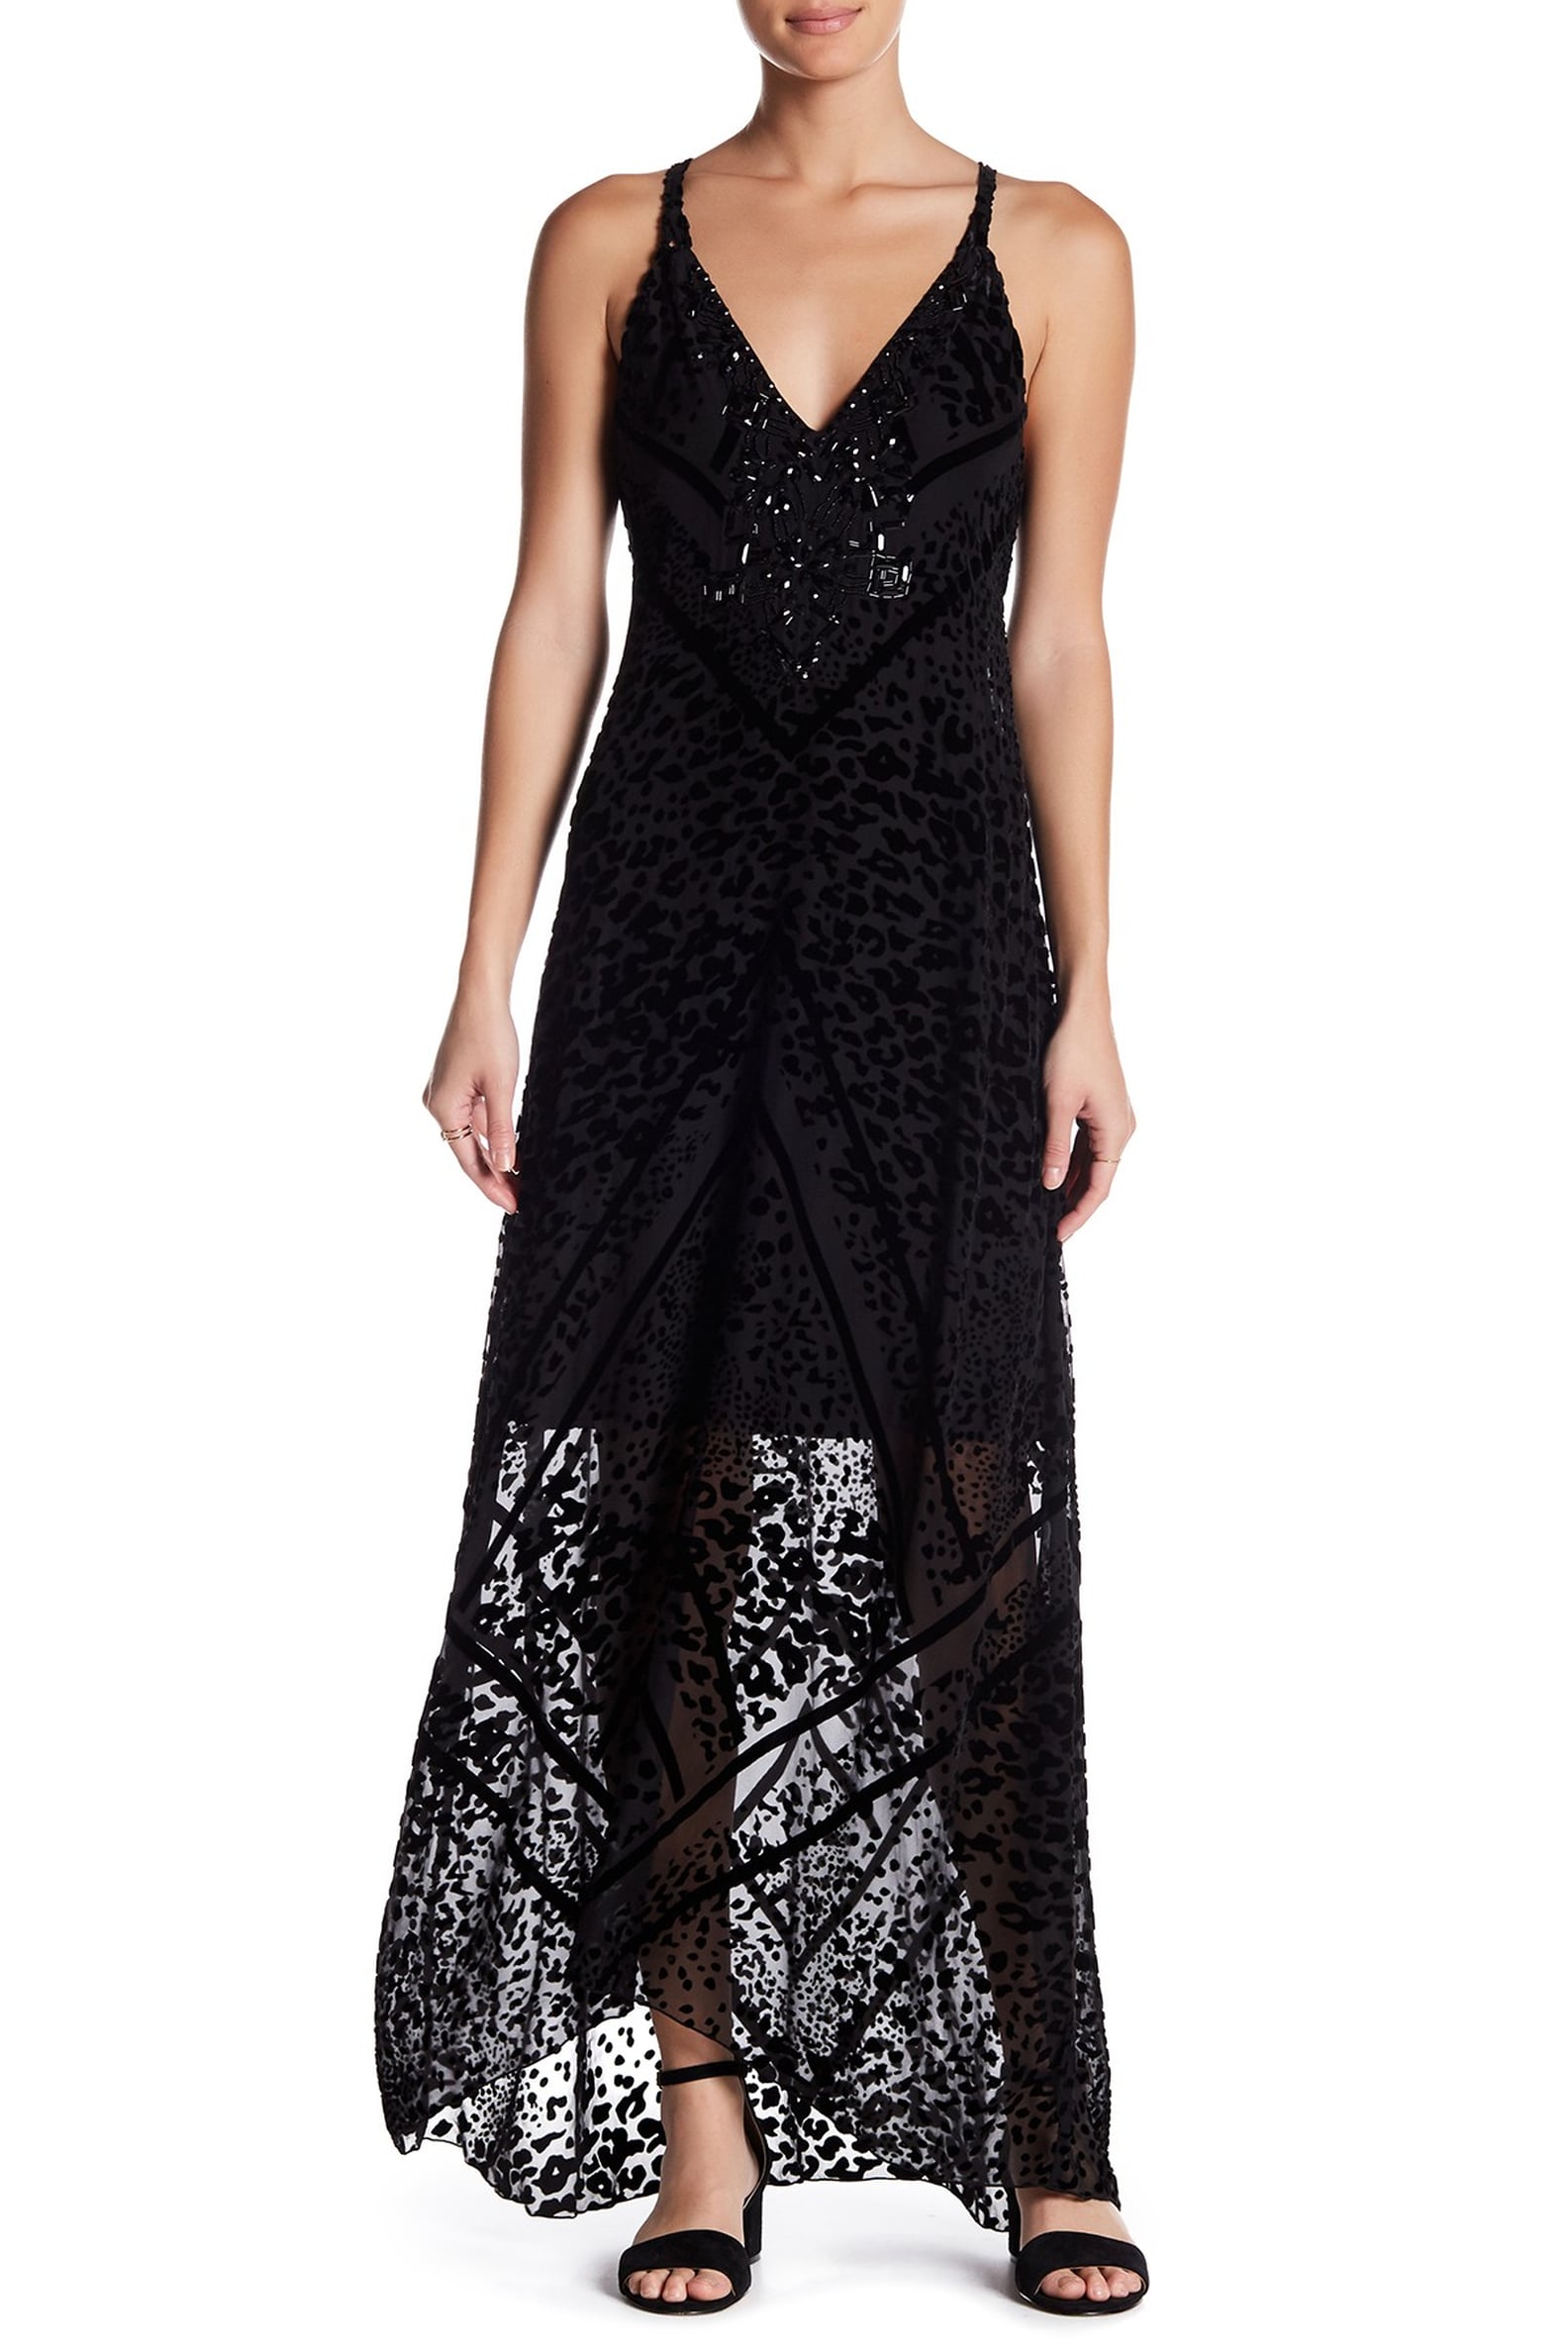 Mandy Moore Black Dress at Justin Hartley's Wedding | POPSUGAR Fashion